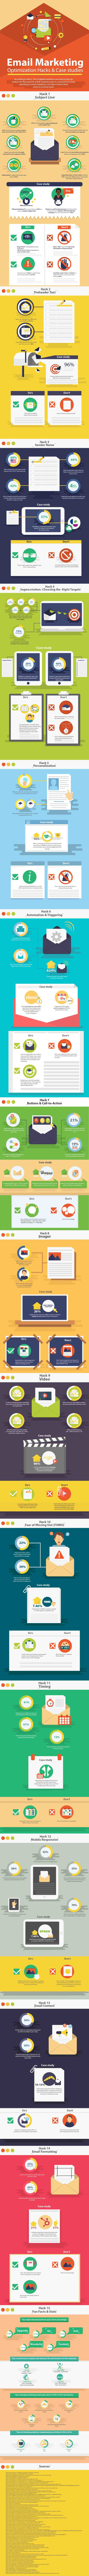 Infographic: Best Email Optimization Hacks + Case Studies